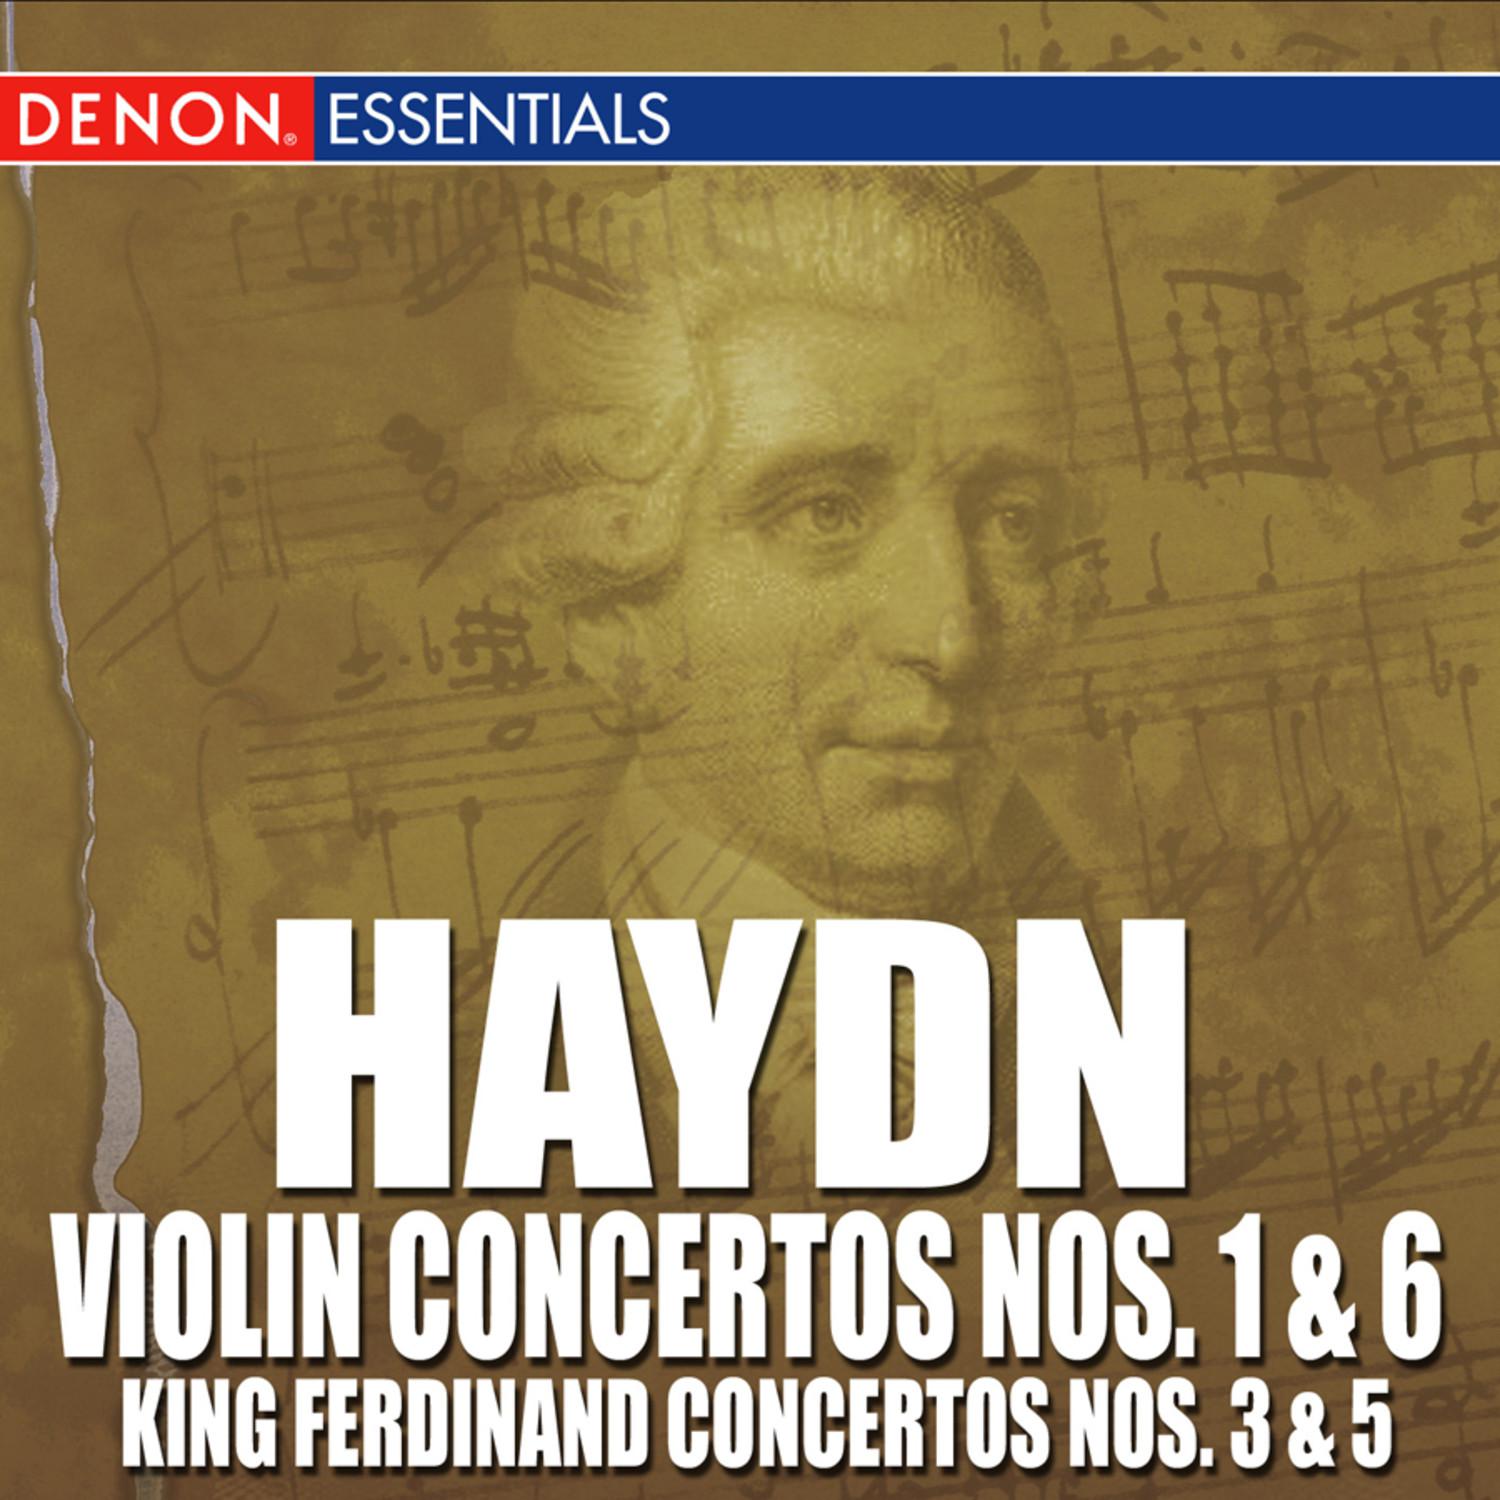 Concerto No. 5 for King Ferdinand IV. of Napoli in F Major, Hob. VII / 5 "Lyren Concerto No. 5": I. Allegro